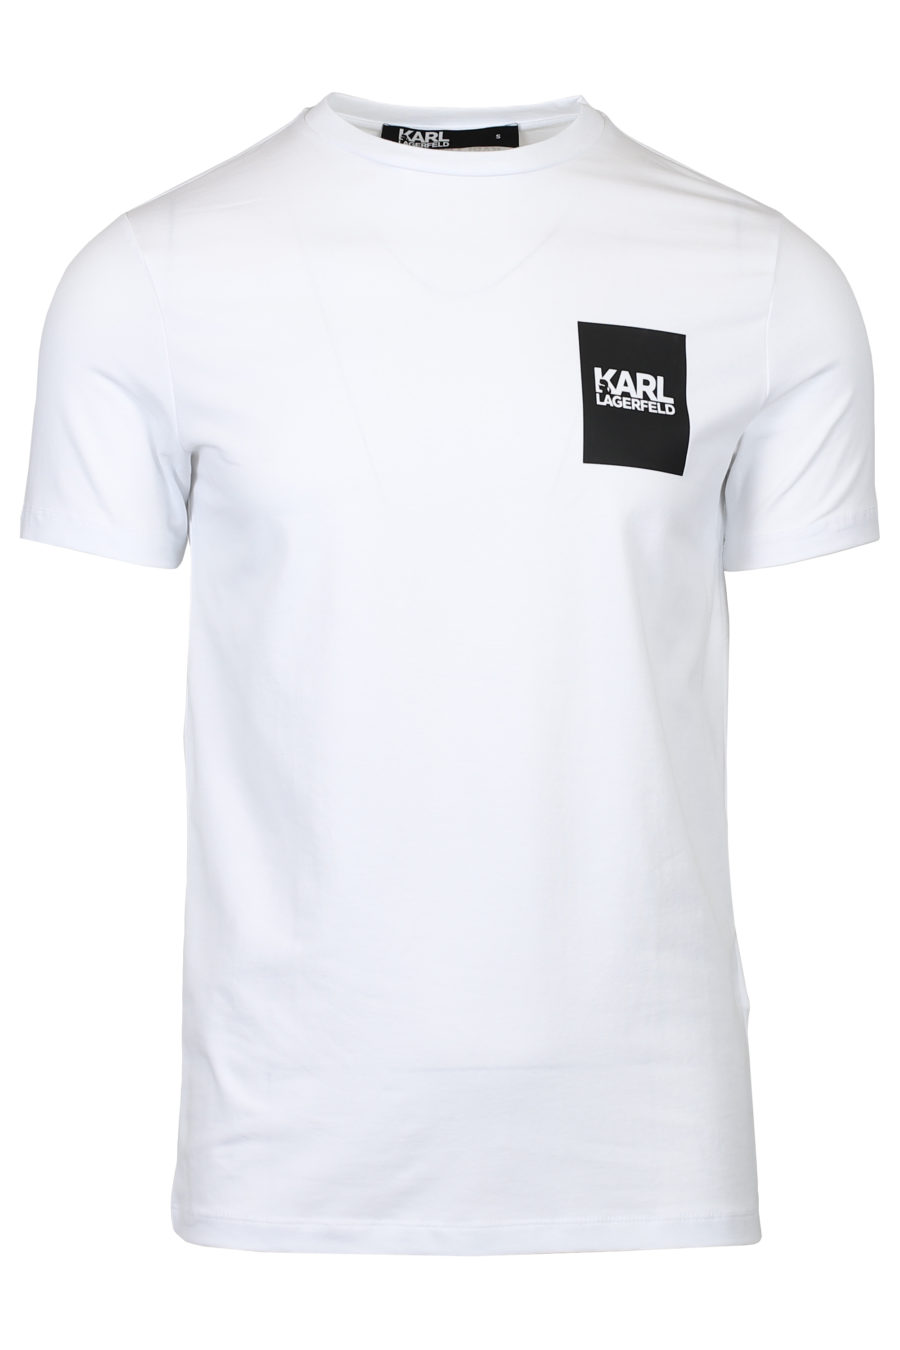 Camiseta blanca logo color negro - IMG 2039